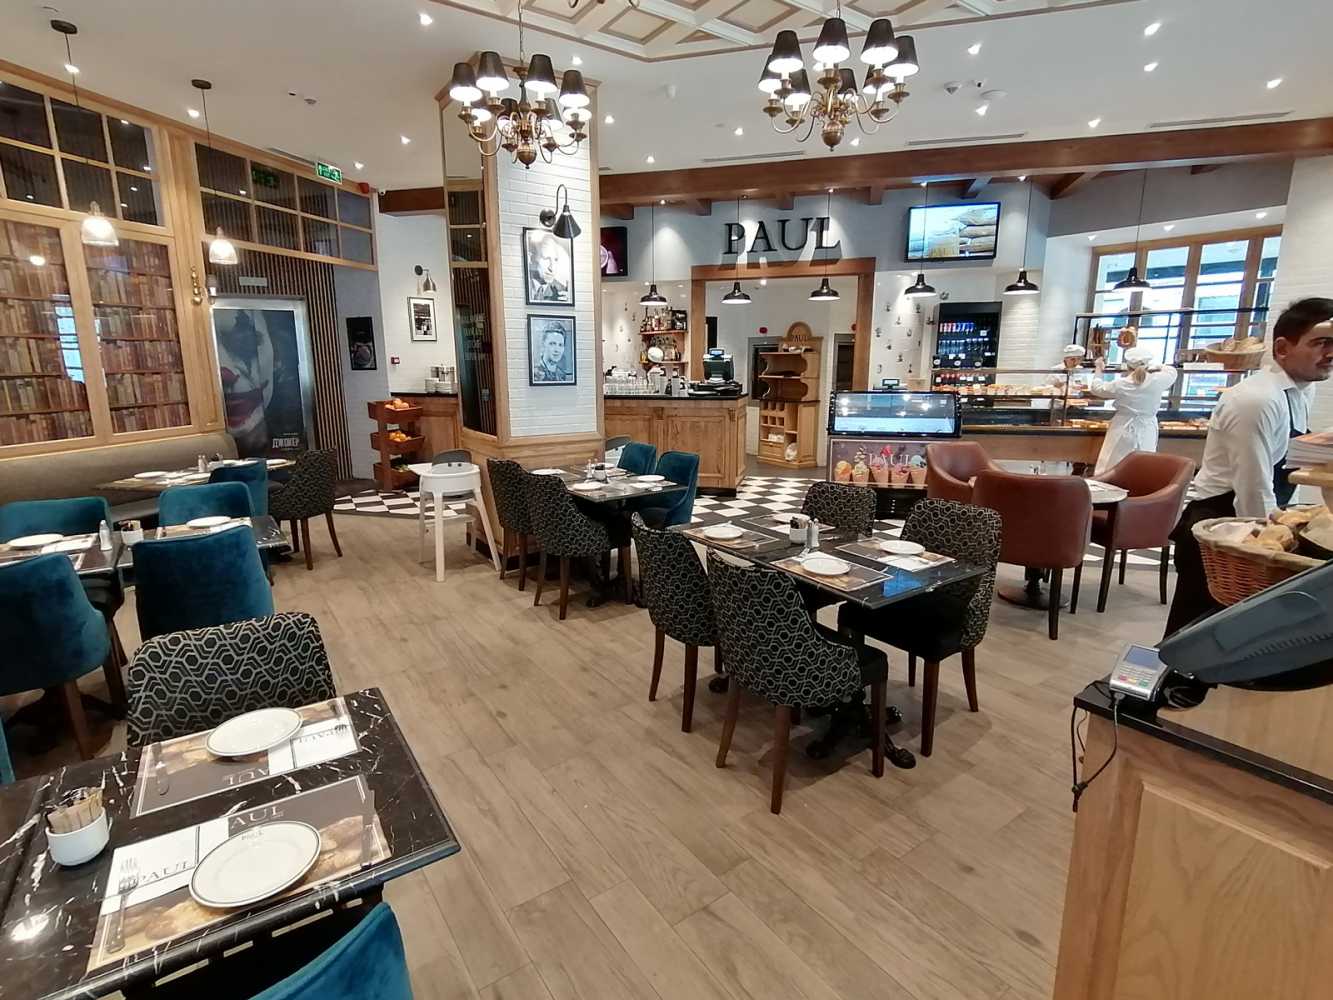 The recently opened Paul restaurant in Baku